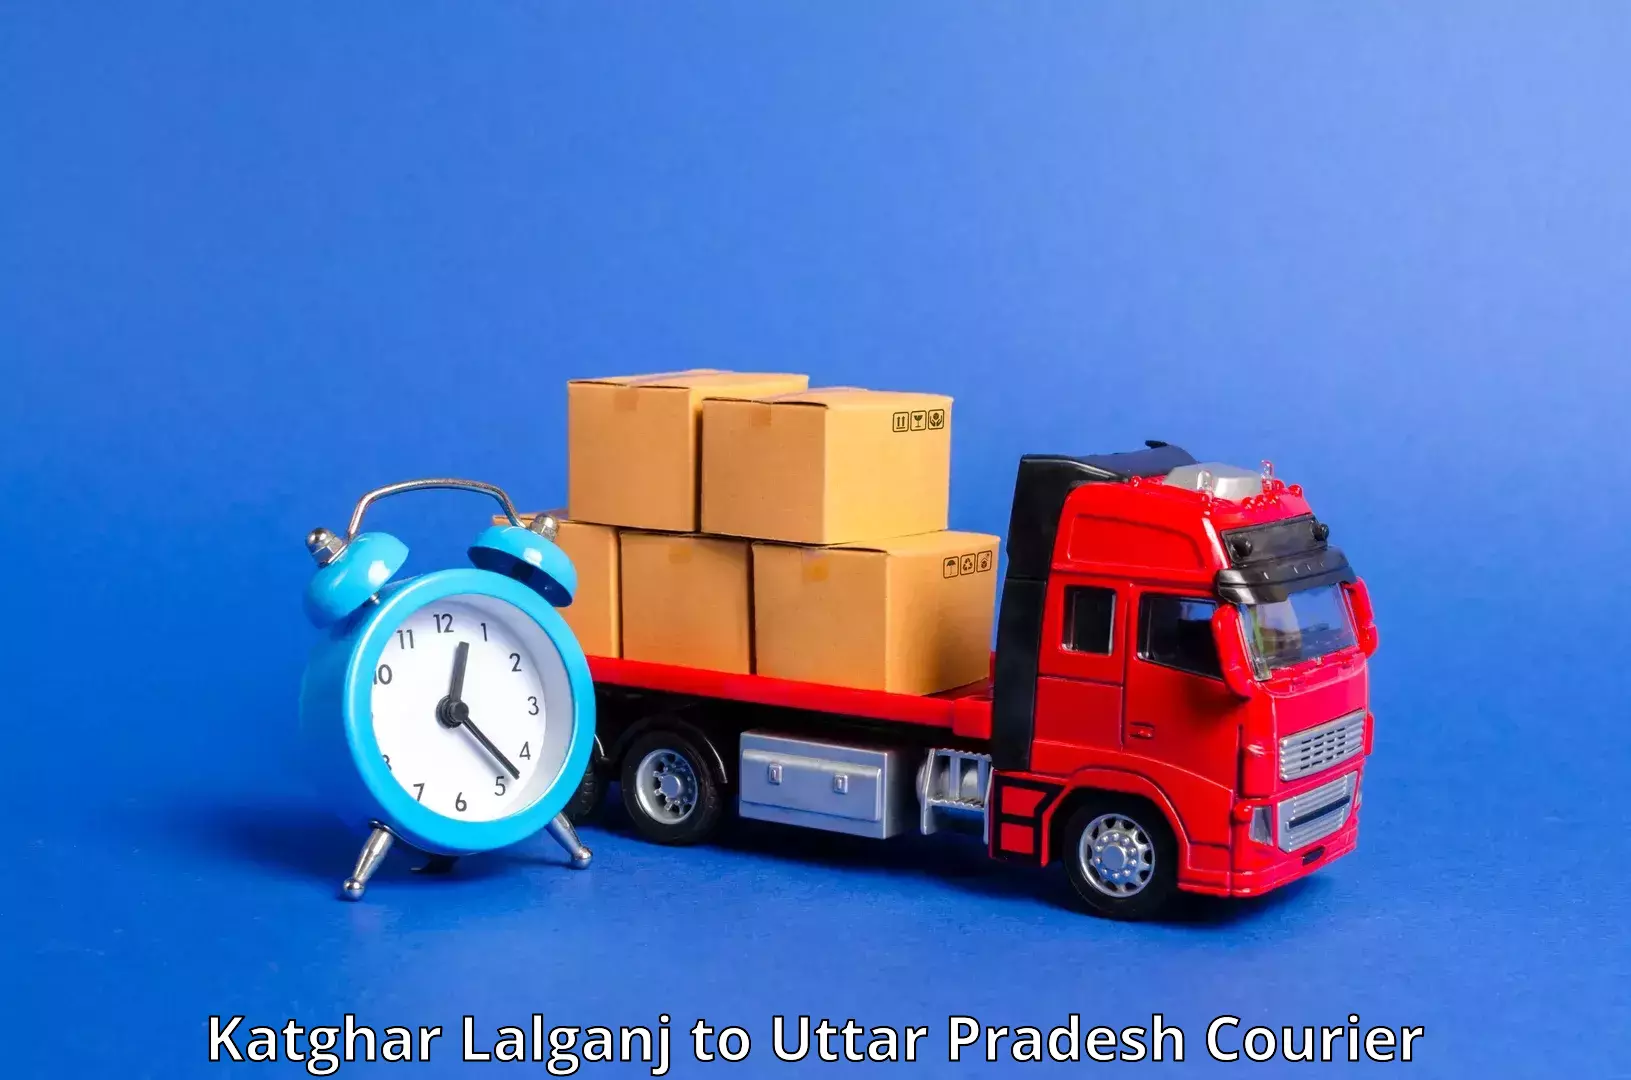 Pharmaceutical courier Katghar Lalganj to Fatehpur